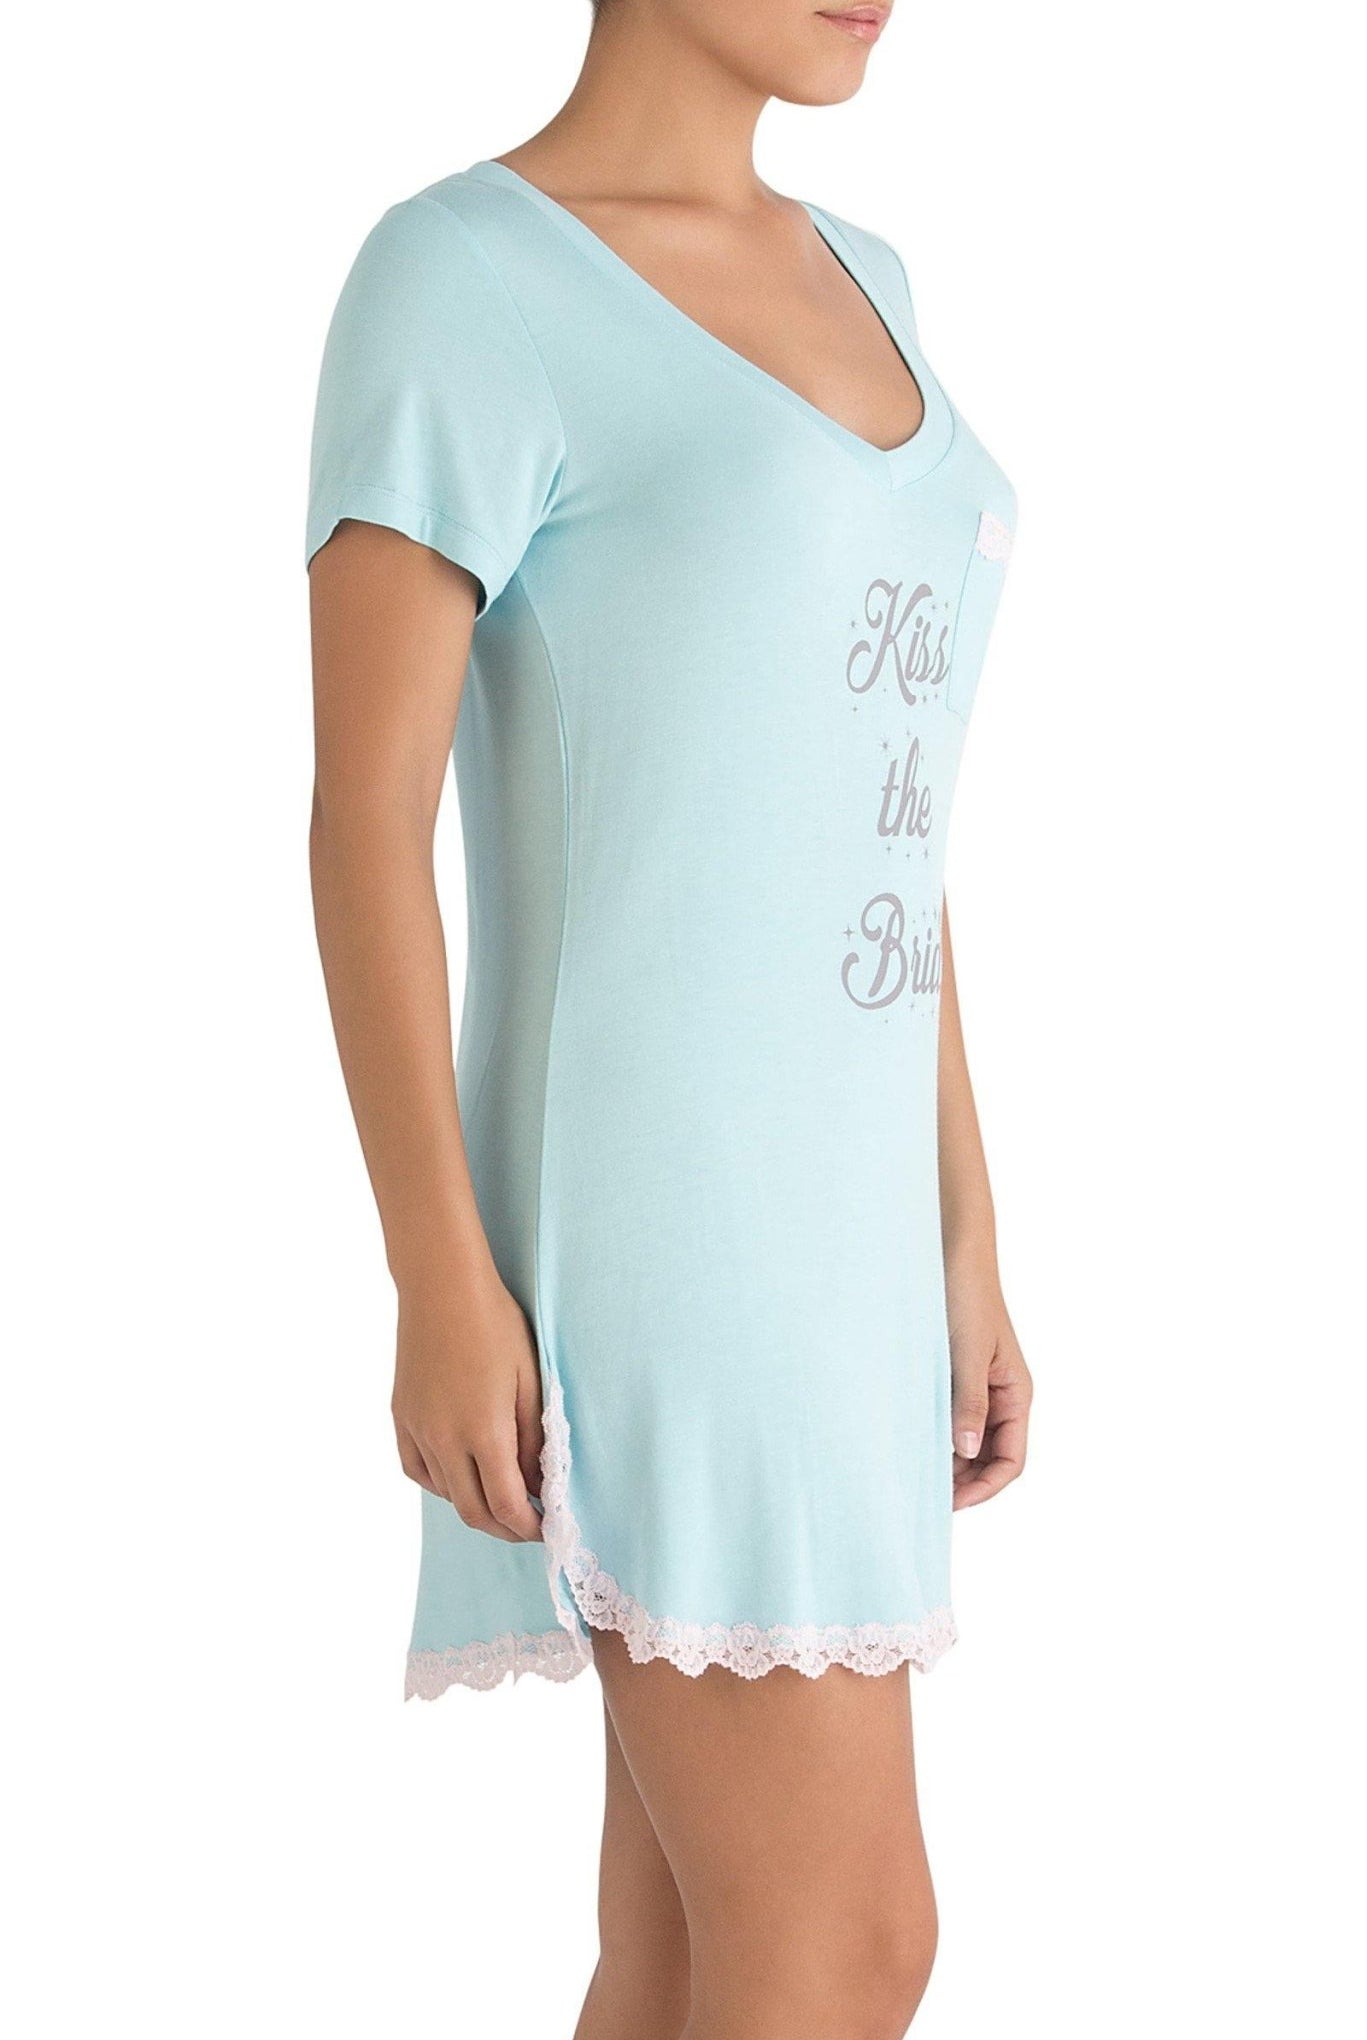 All American Sleepshirt - Sleepwear & Loungewear -